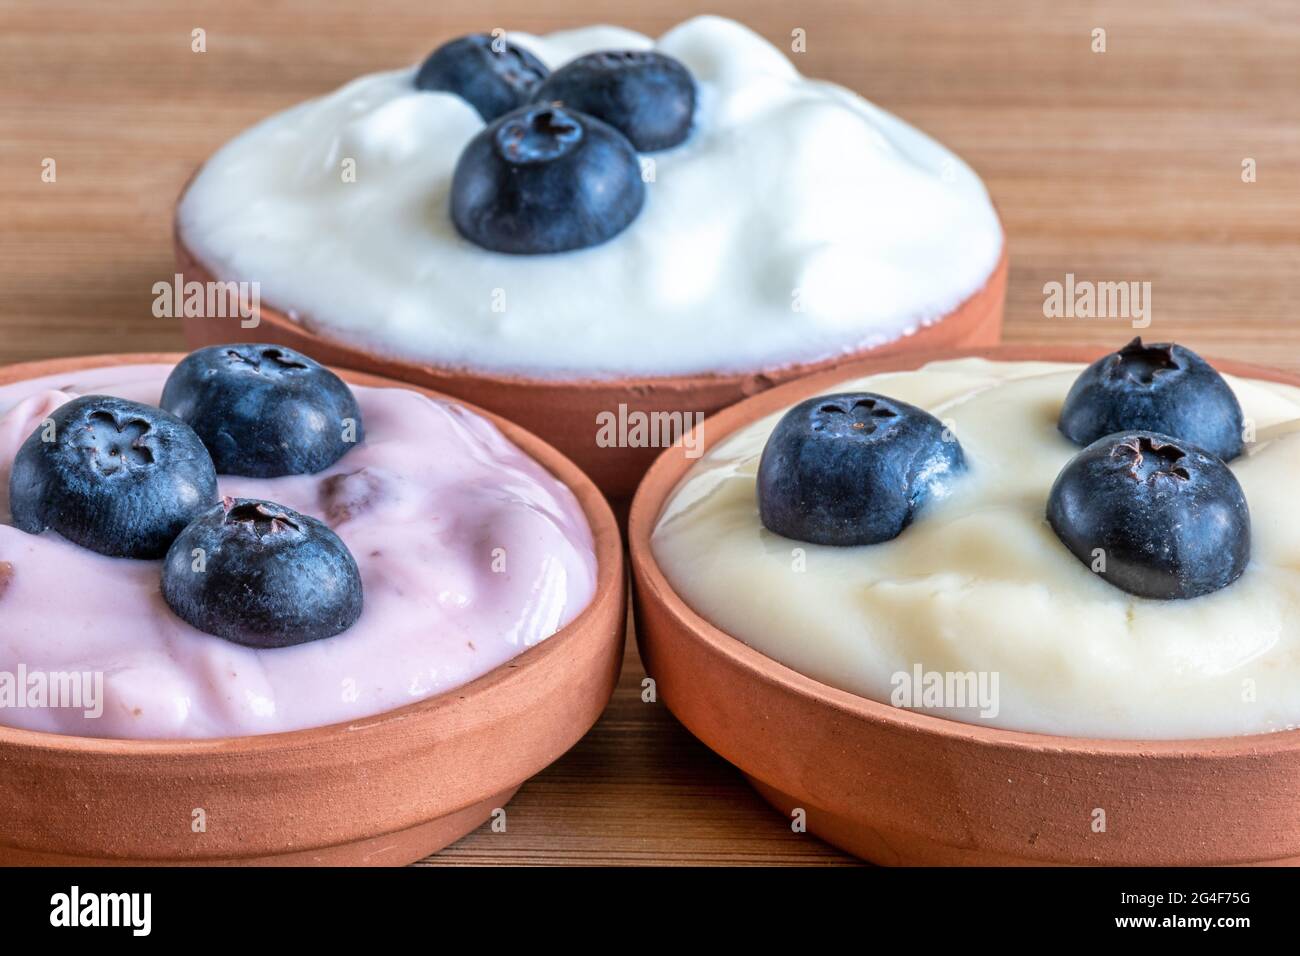 Varieties of yogurt with blueberries. Healthy eating concept Stock Photo